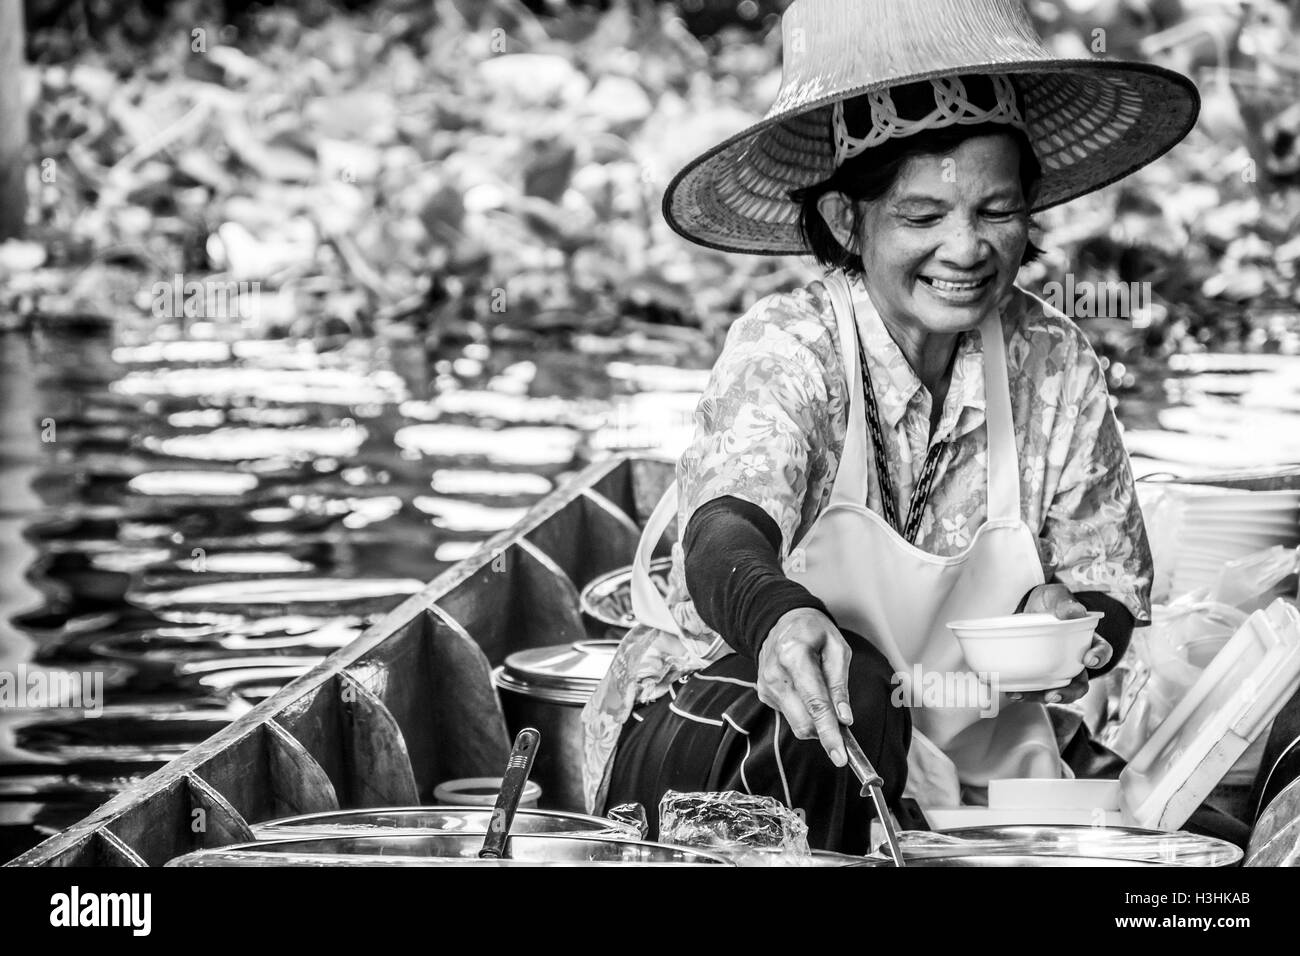 Thaïlande Bangkok Taling chan marché flottant traditionnel 2 Banque D'Images